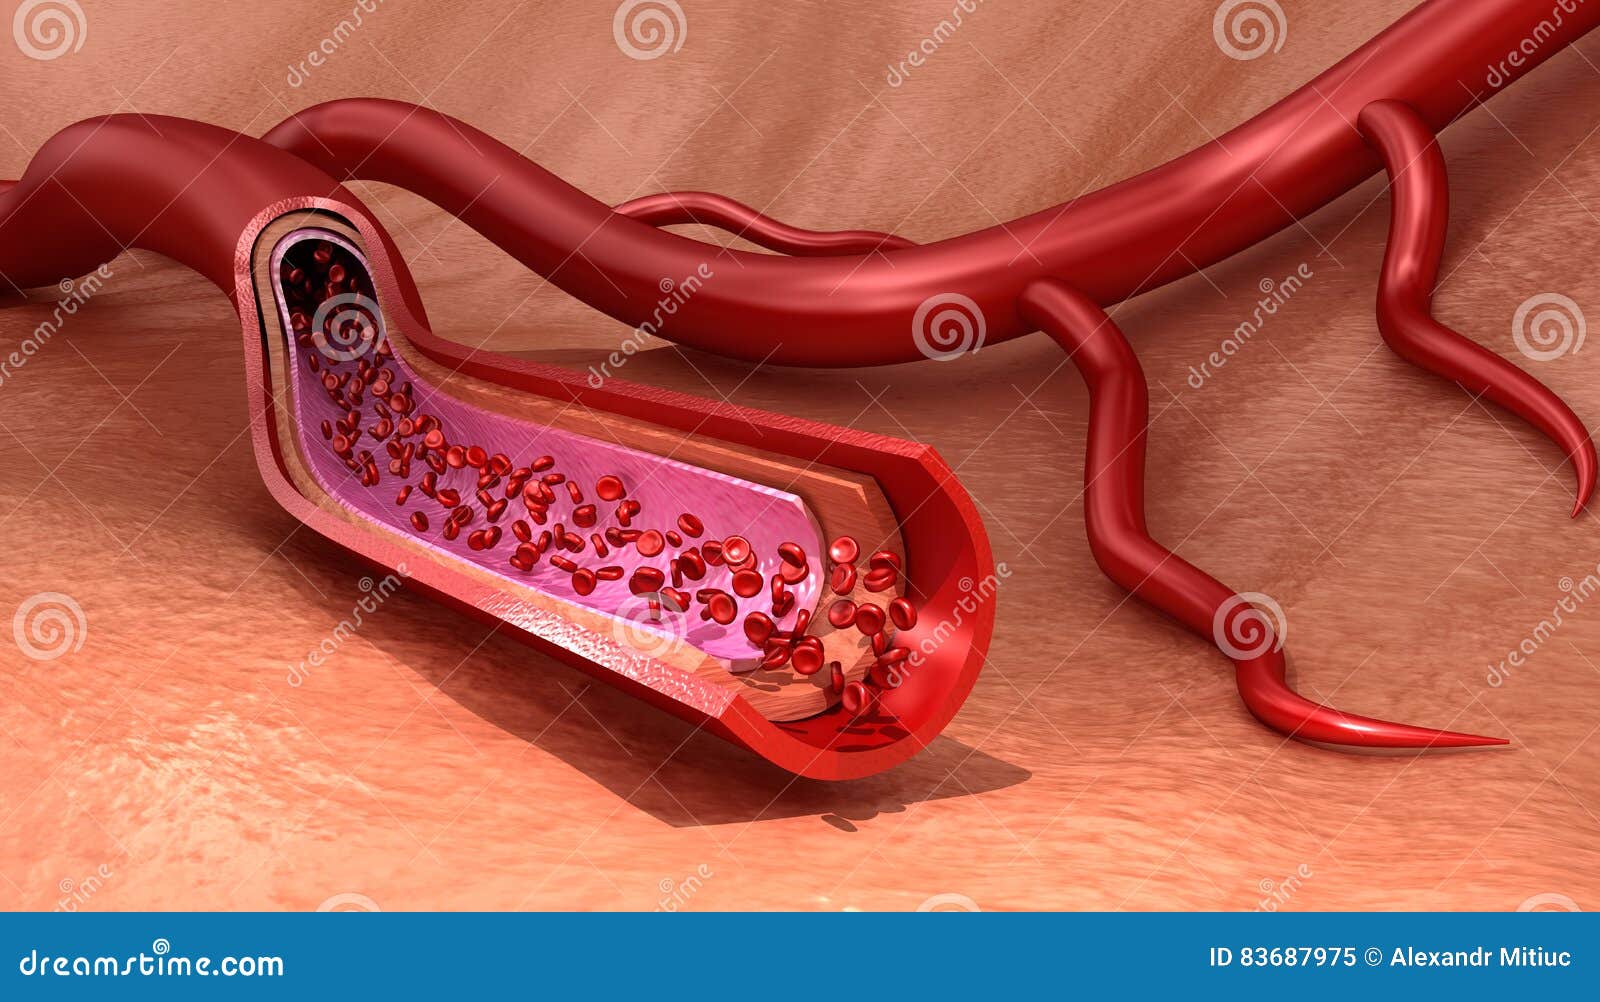 blood vessel sliced macro with erythrocytes